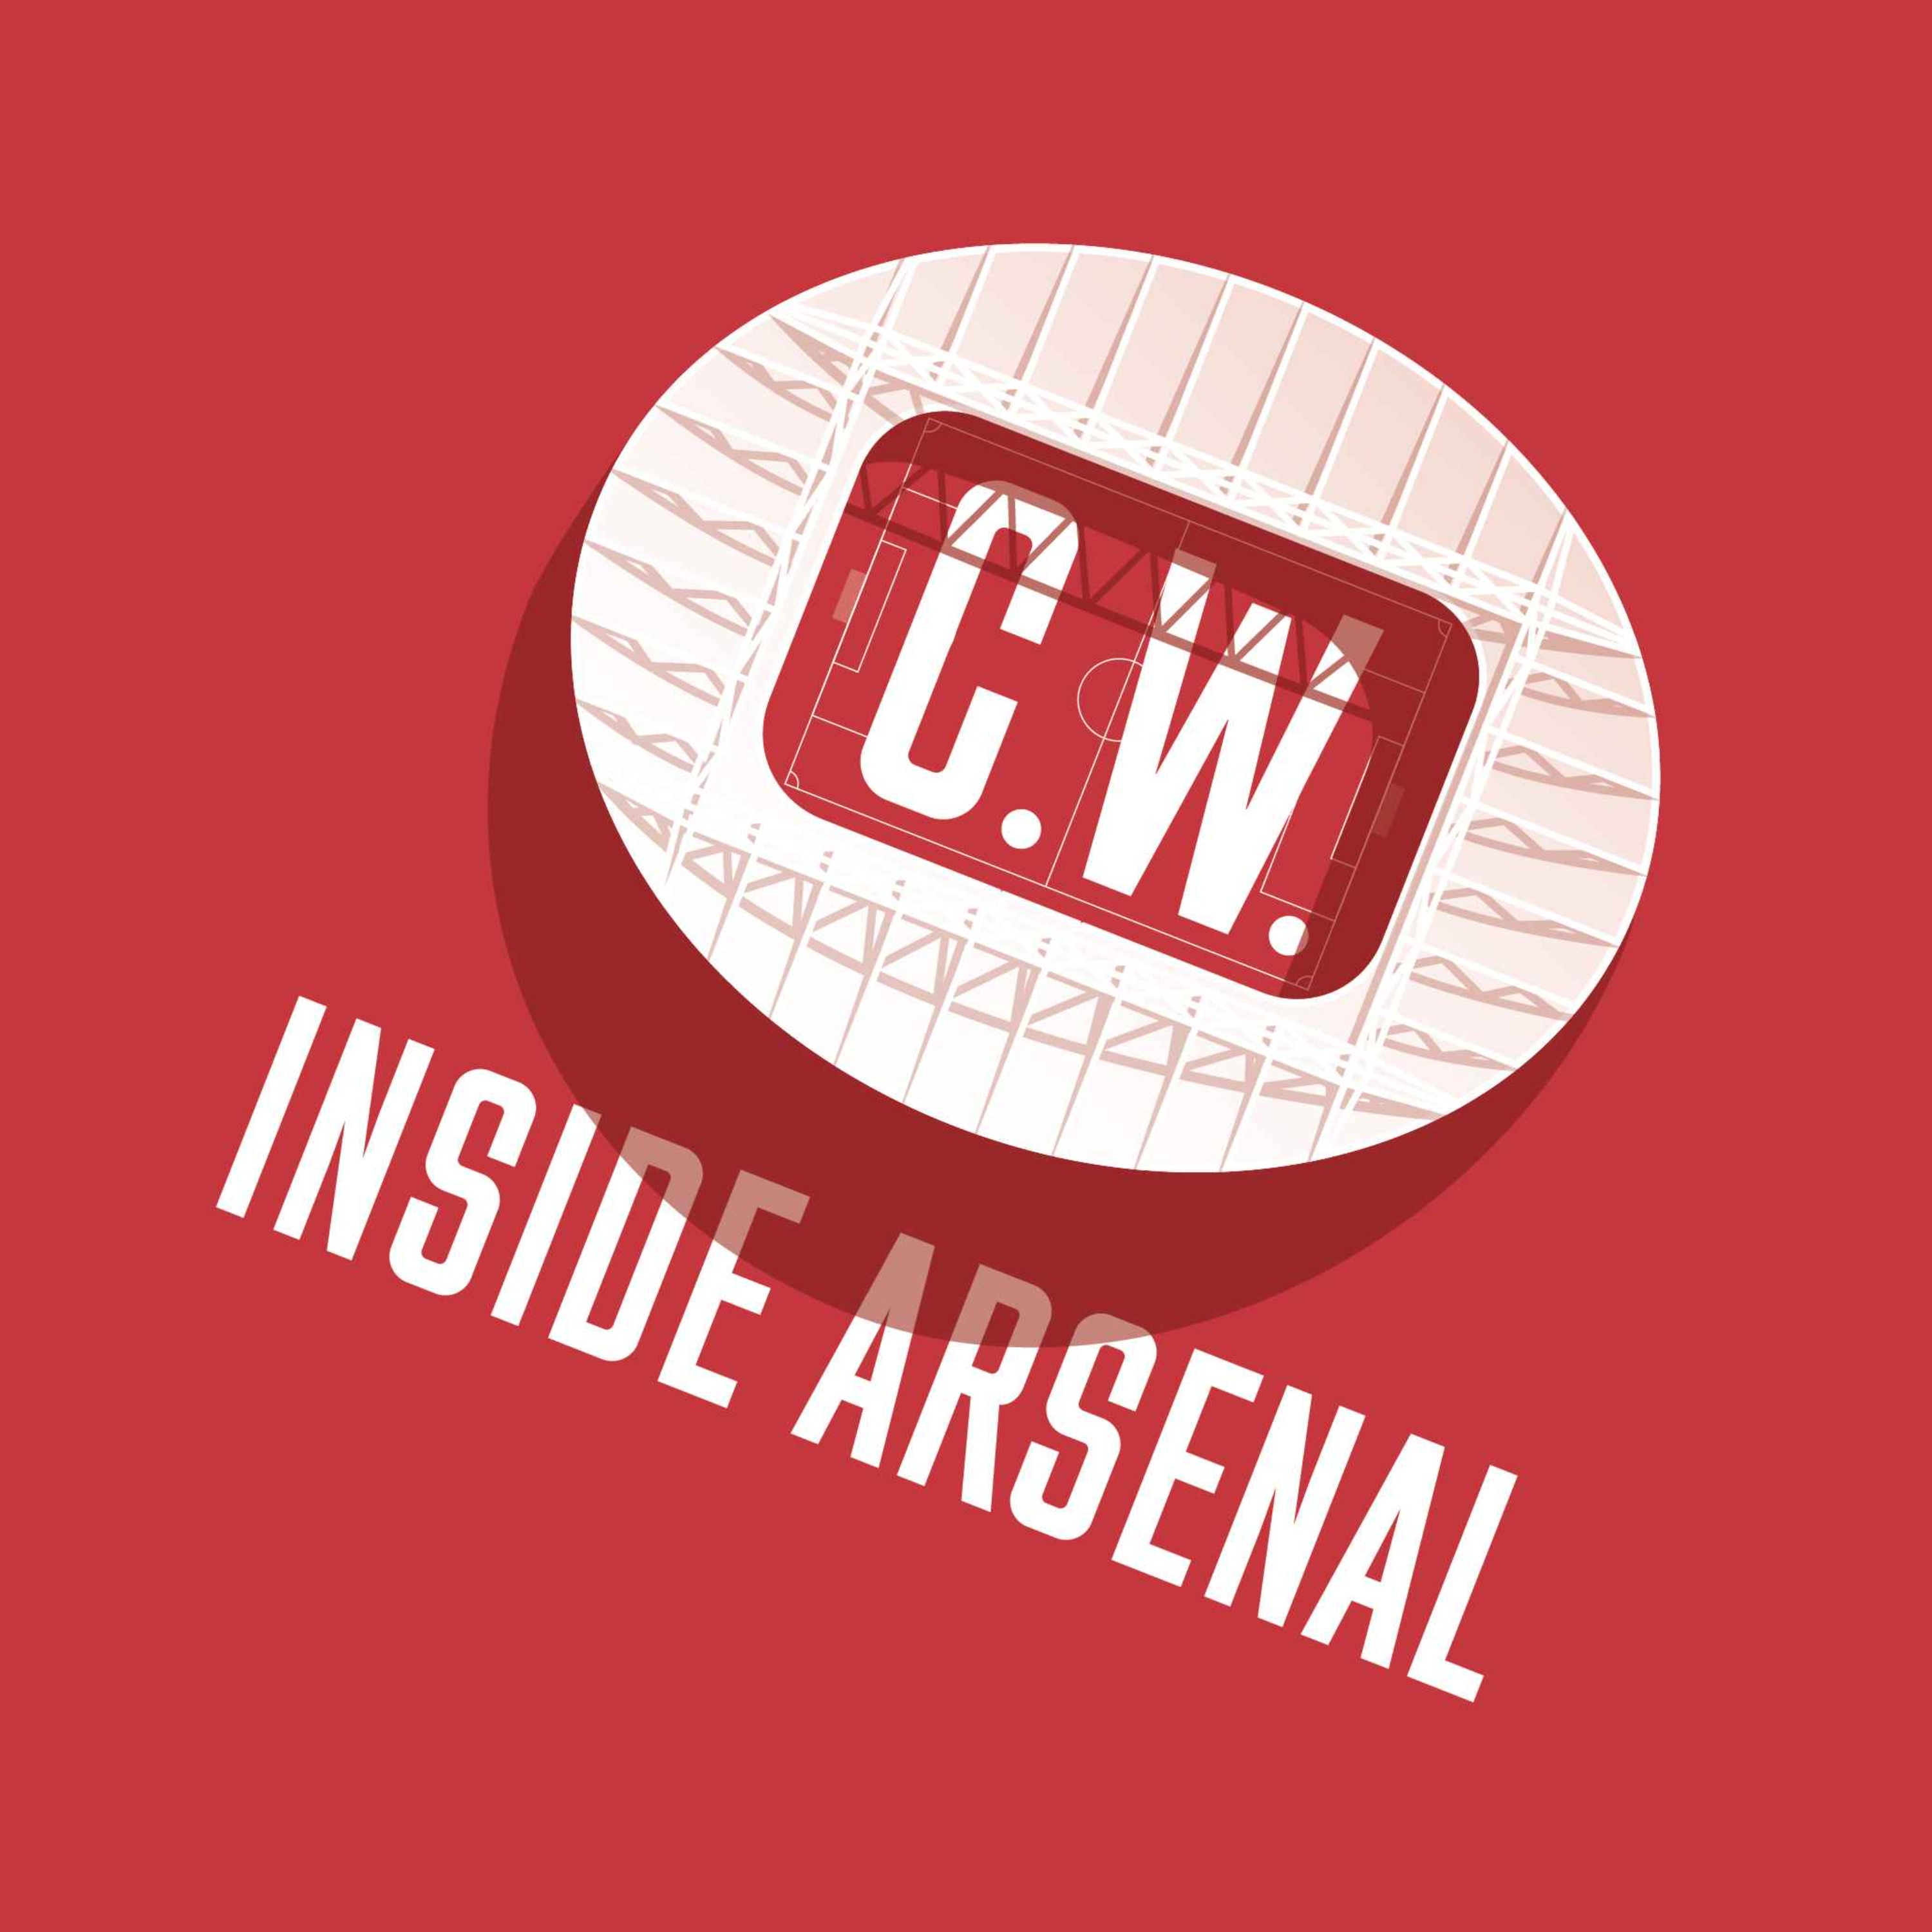 Arsenal transfer talk: Solanke links, selling players + Xhaka on Havertz